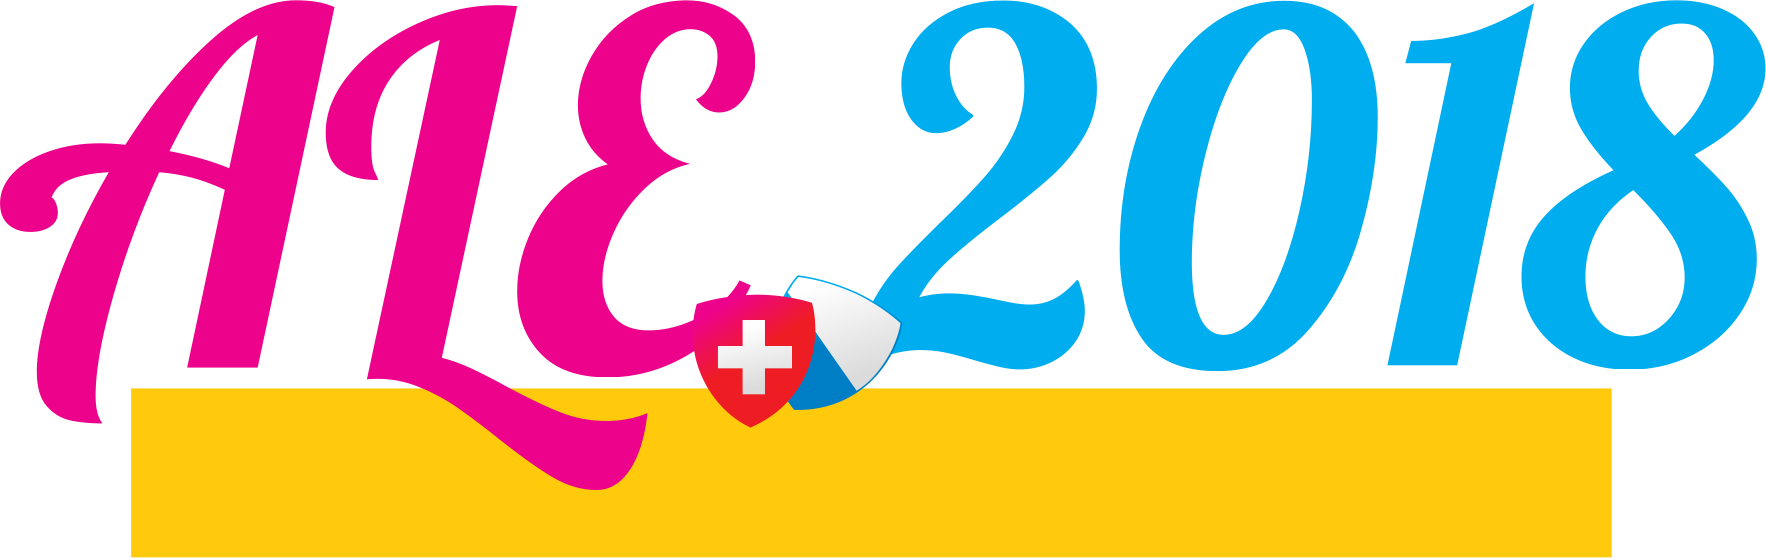 ale-2018-zurich-logo-midi-m